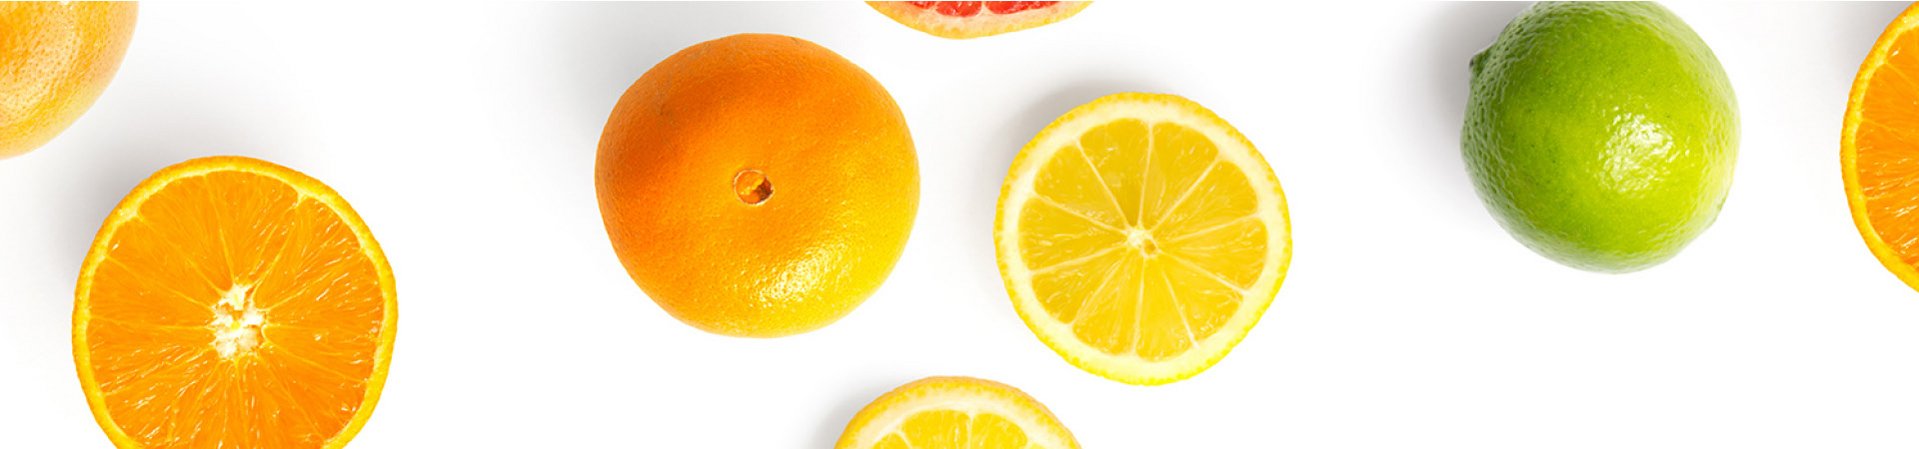 Arance, limoni e lime su sfondo bianco